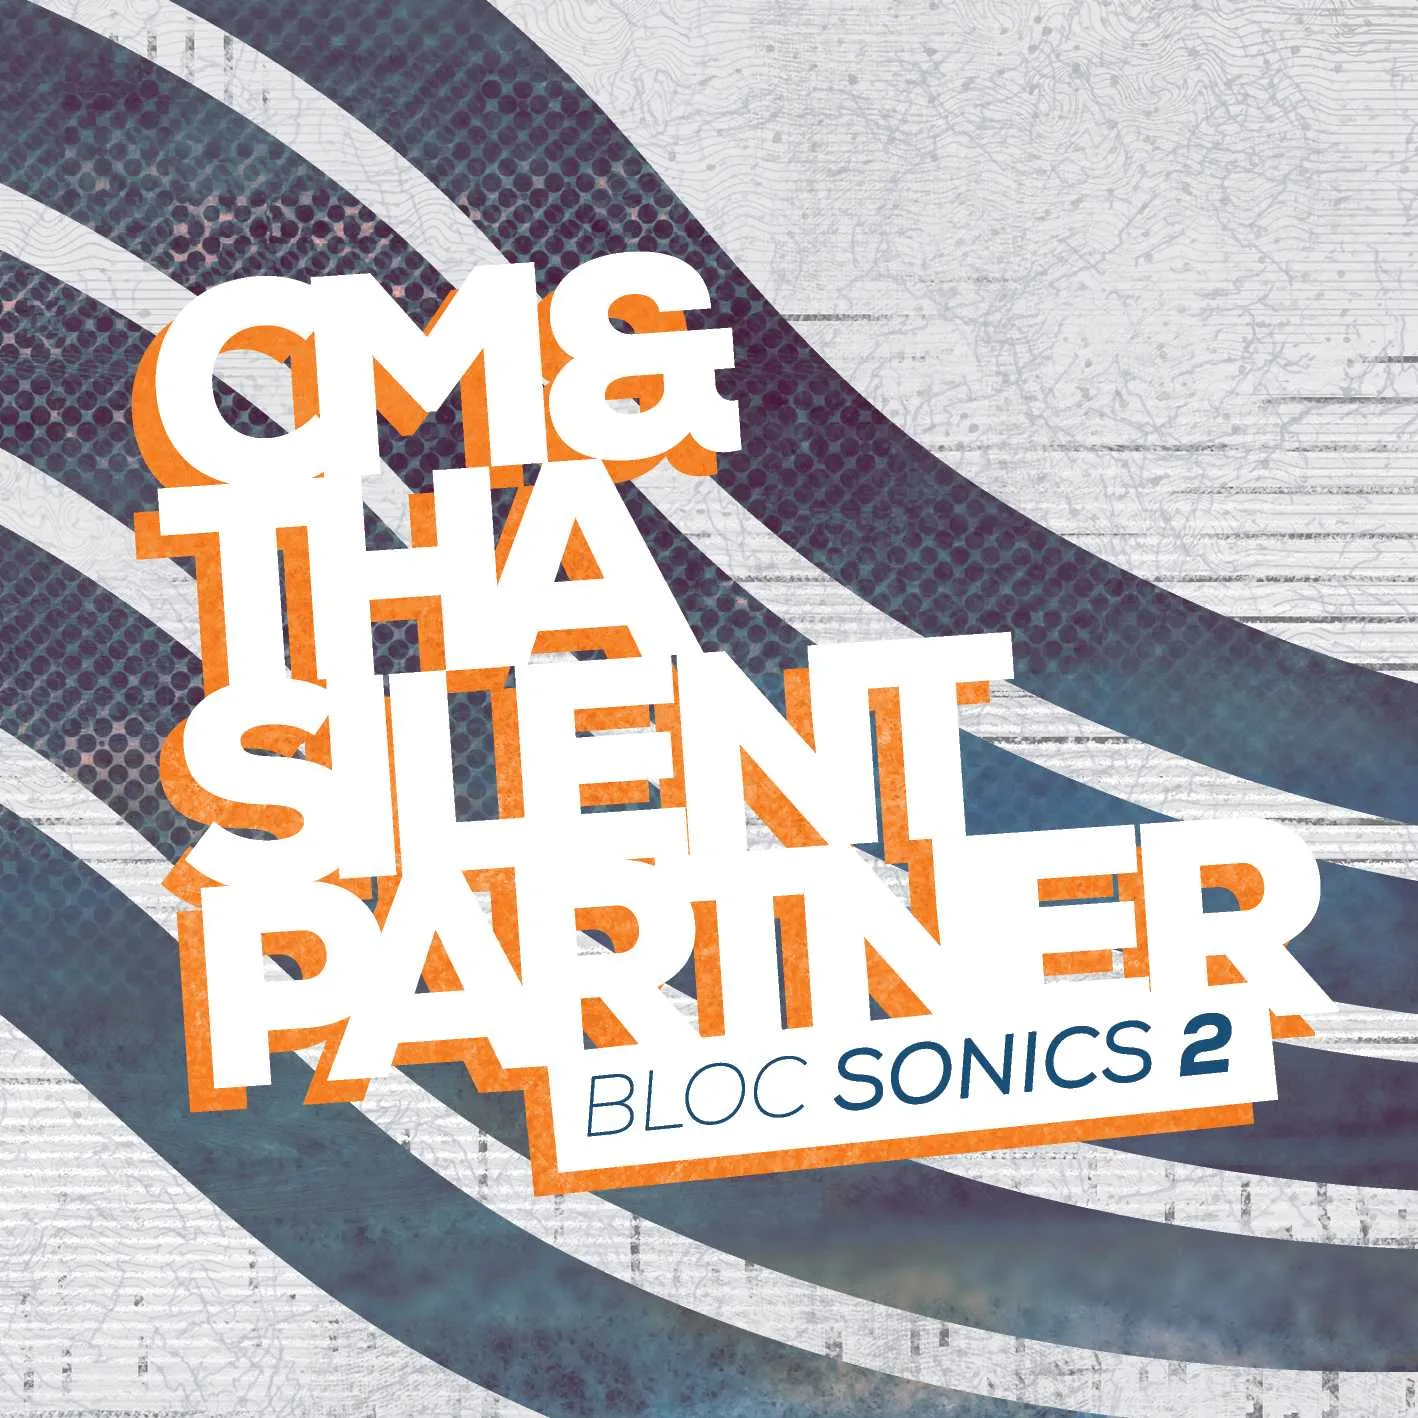 Album cover for “bloc Sonics 2” by CM &amp; Tha Silent Partner